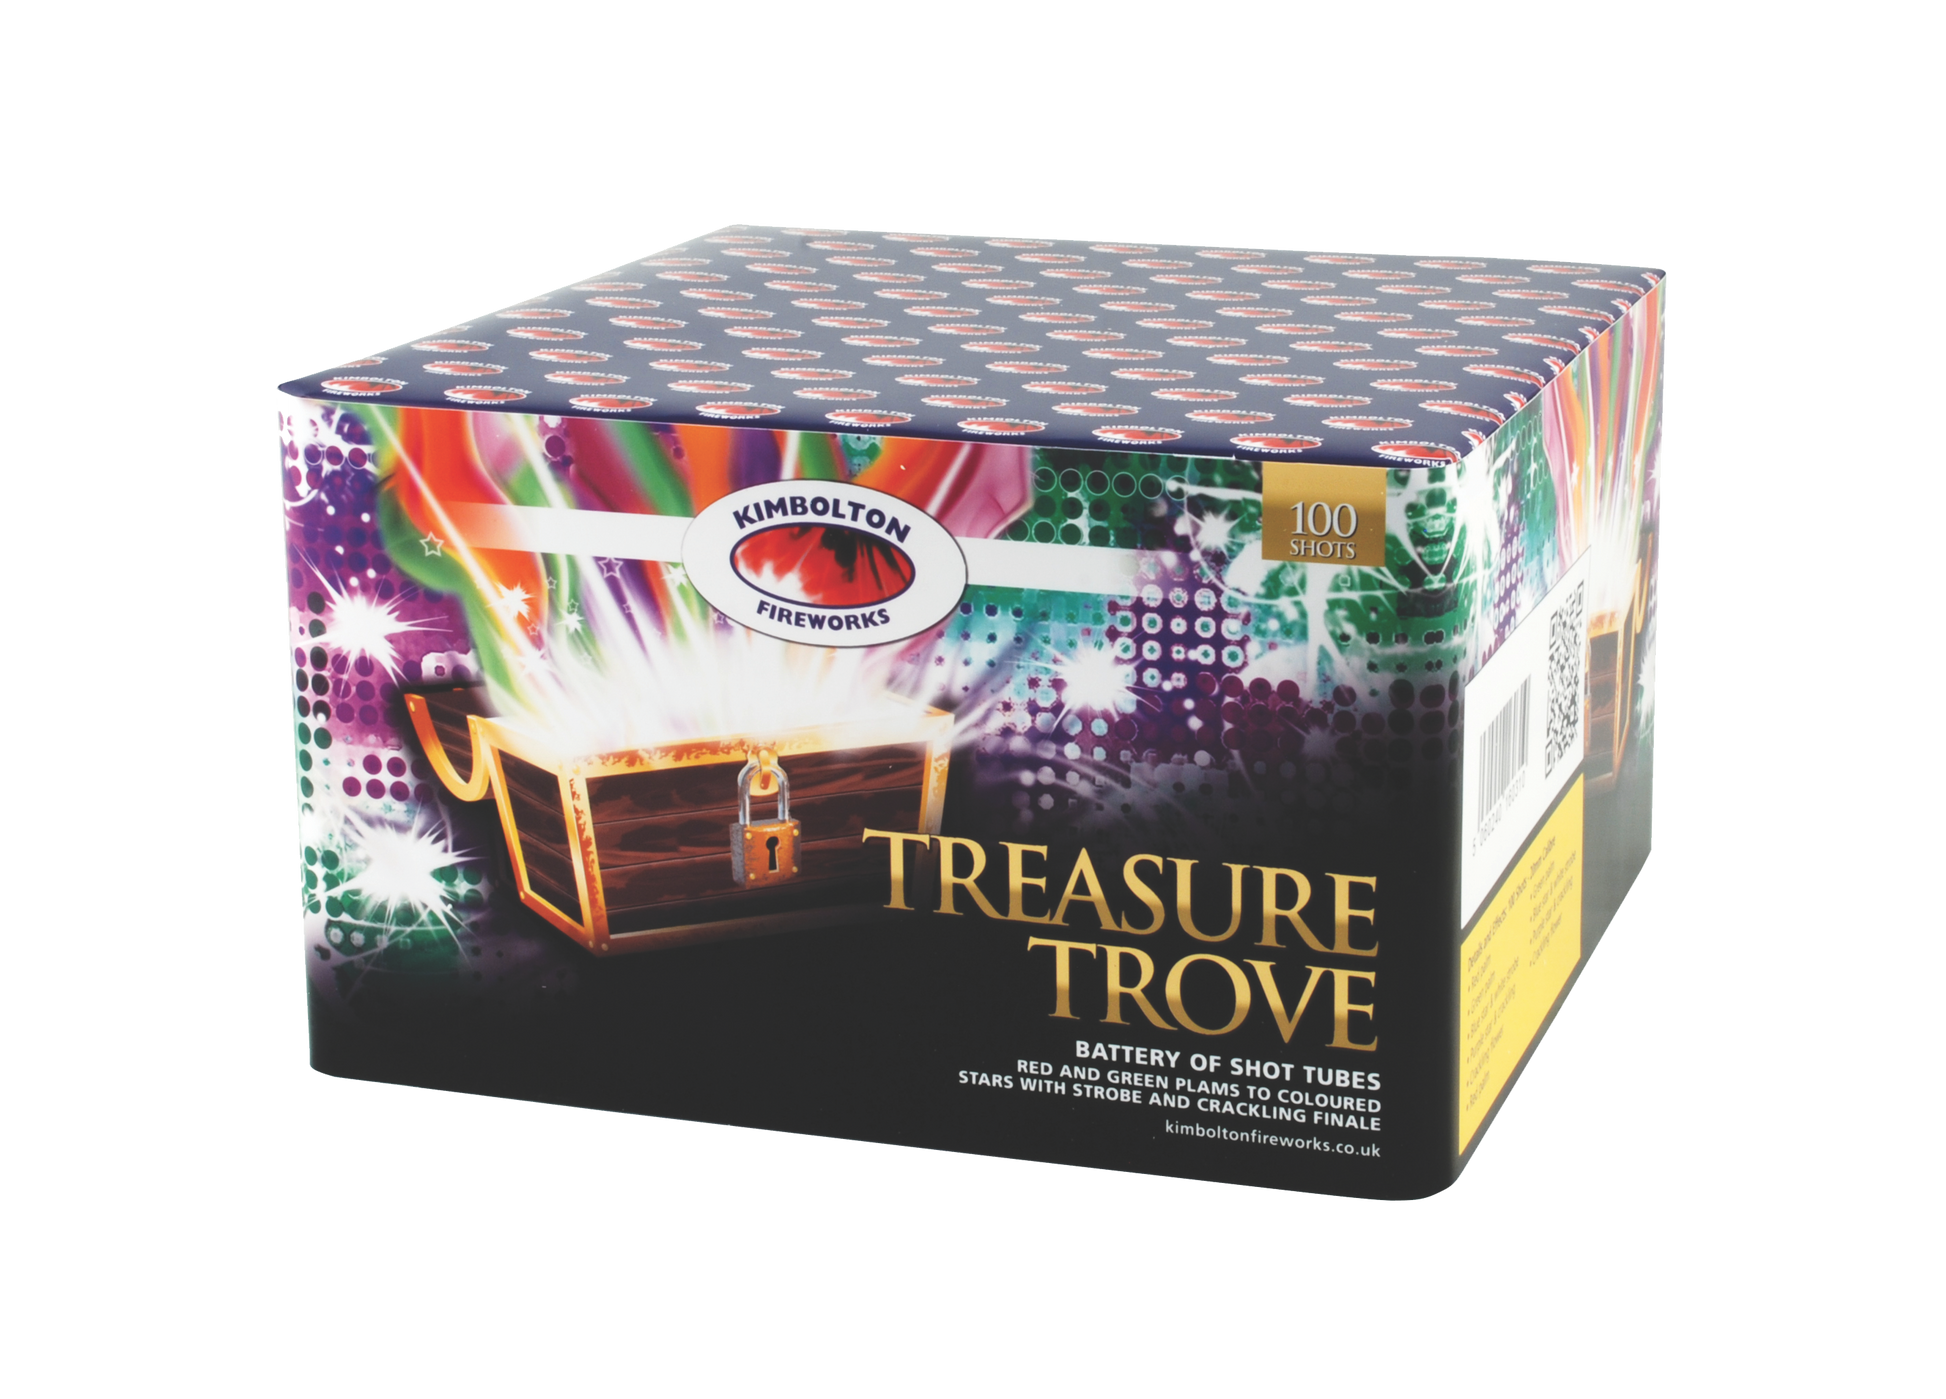 Treasure Trove by Kimbolton Fireworks